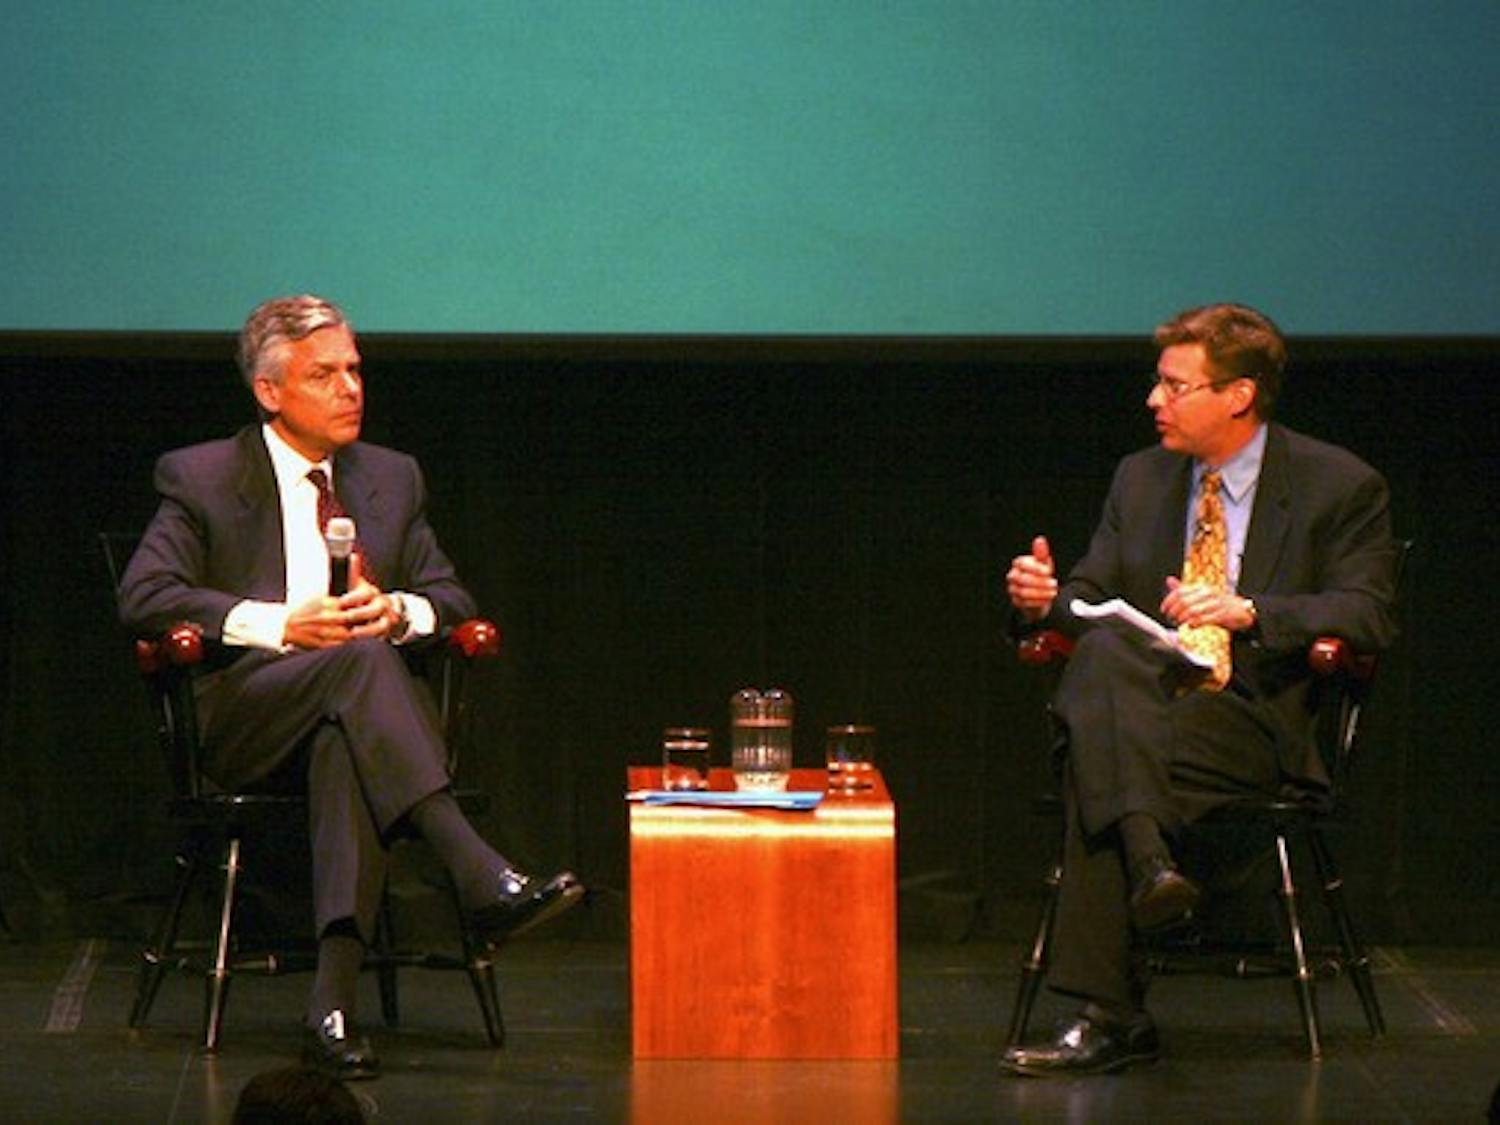 Former U.S. Ambassador to China John Huntsman discussed U.S.-China relations and economic policy with Professor Charles Whelan.